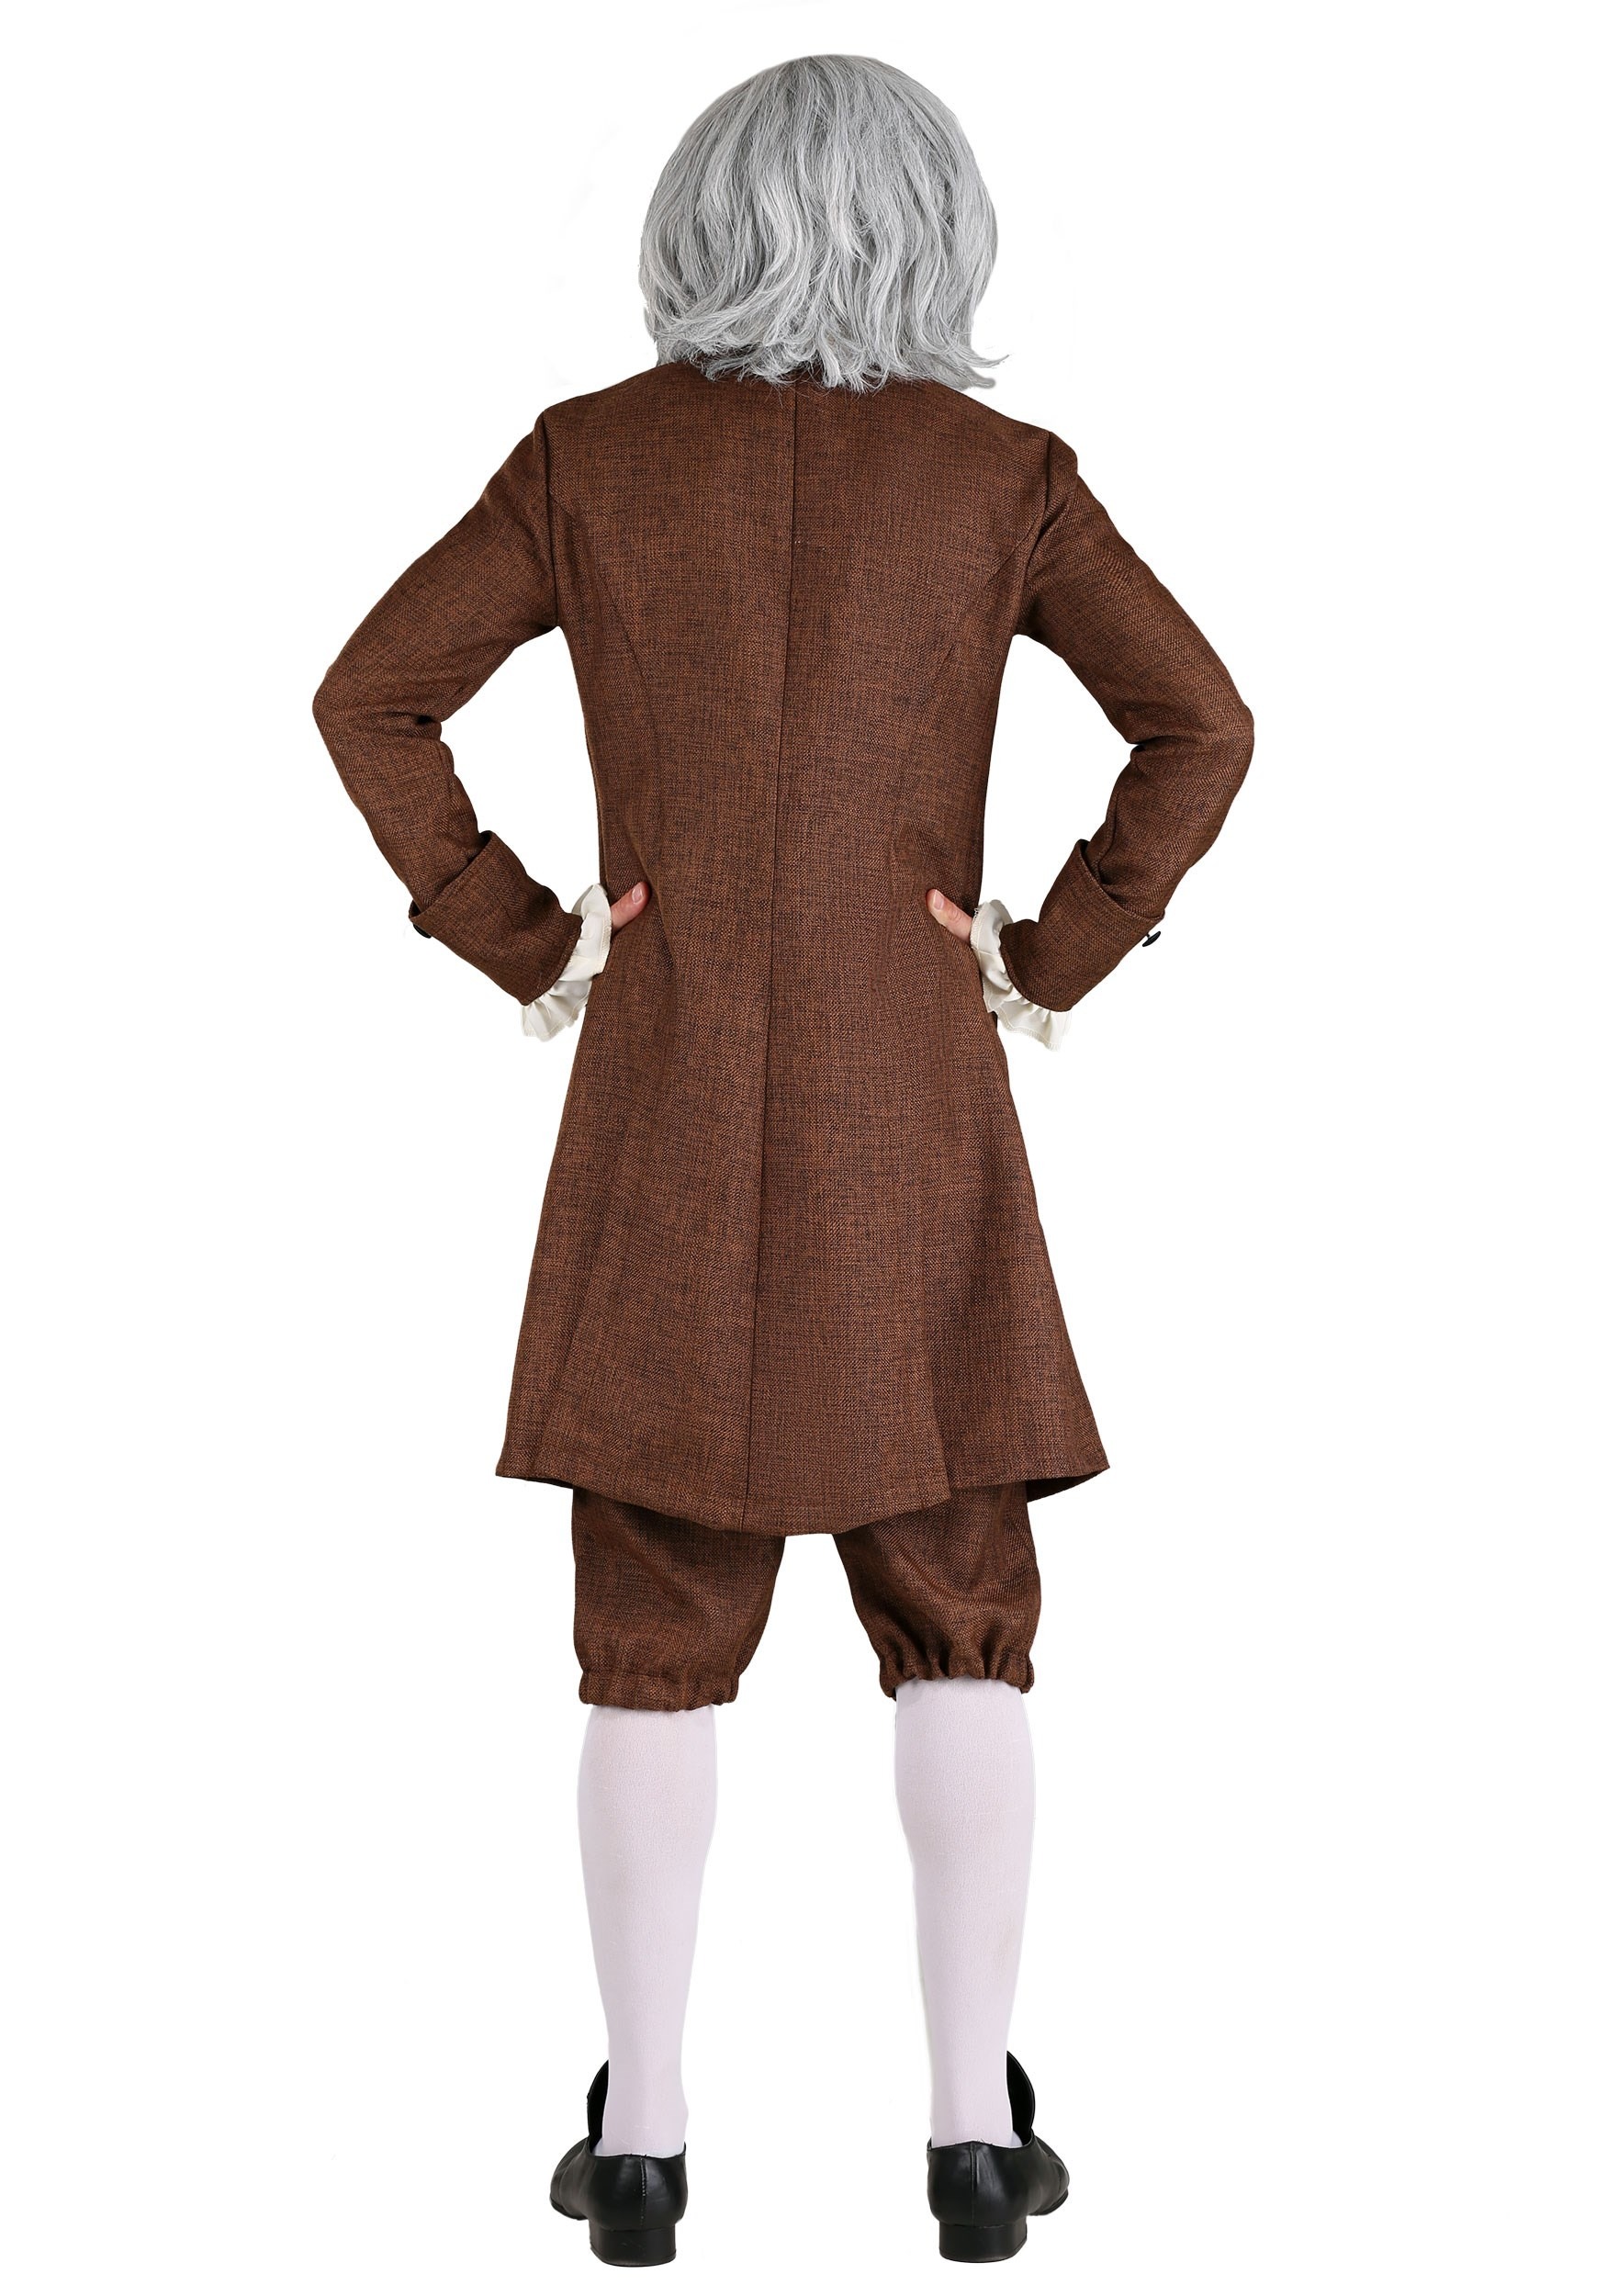 Plus Size Colonial Benjamin Franklin Men's Fancy Dress Costume